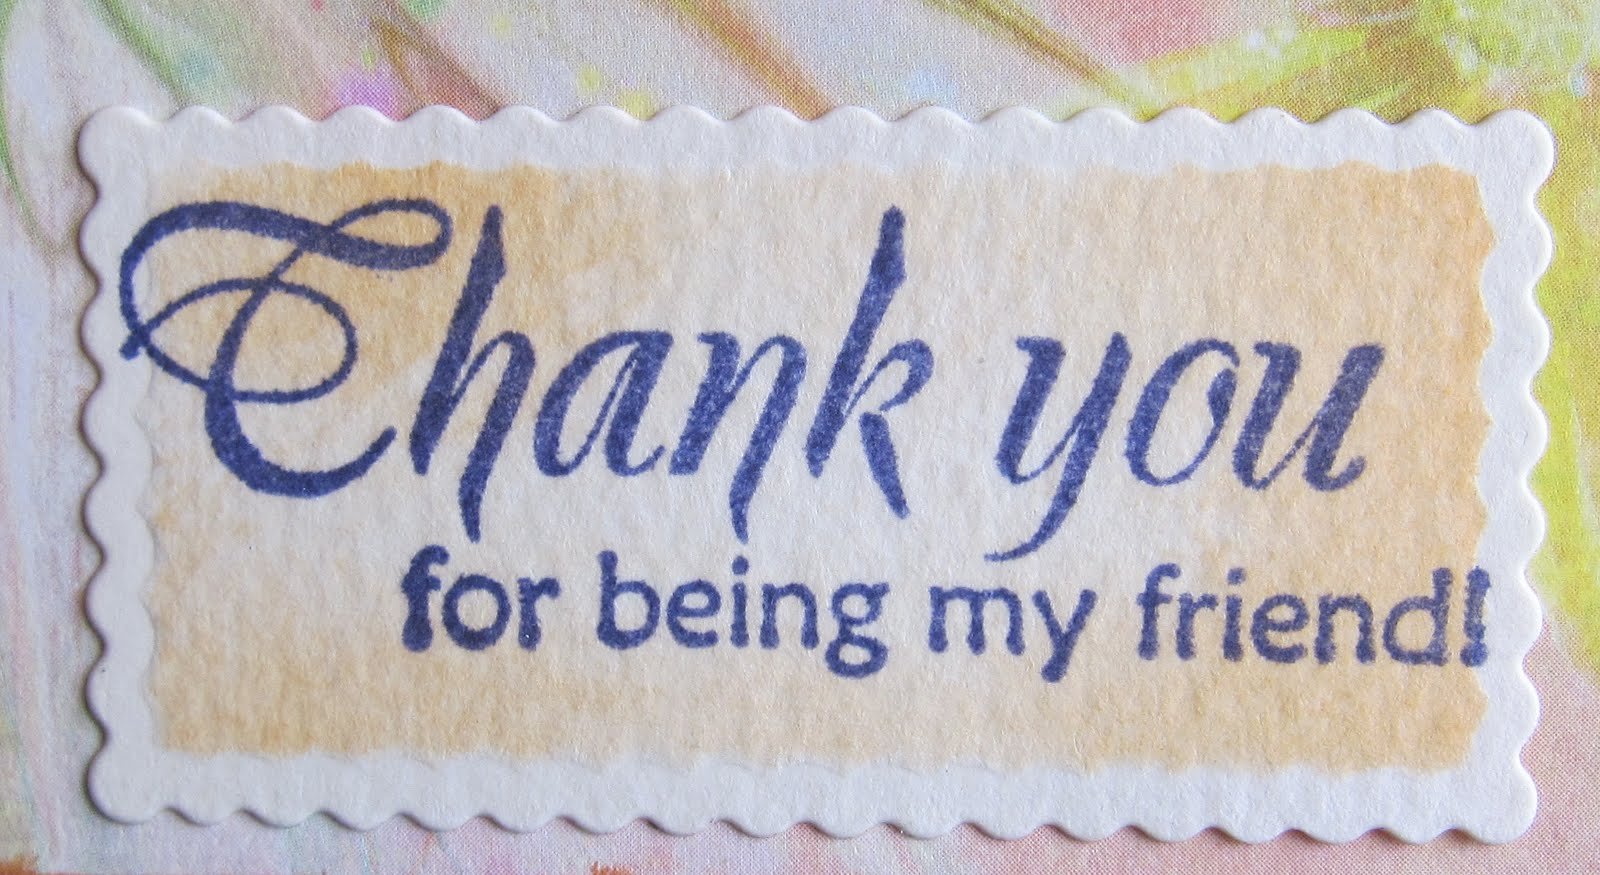 Thanks for being my friend. Открытка thank you. Спасибо на английском. Открытка с благодарностью на английском языке. Спасибо друг на английском.